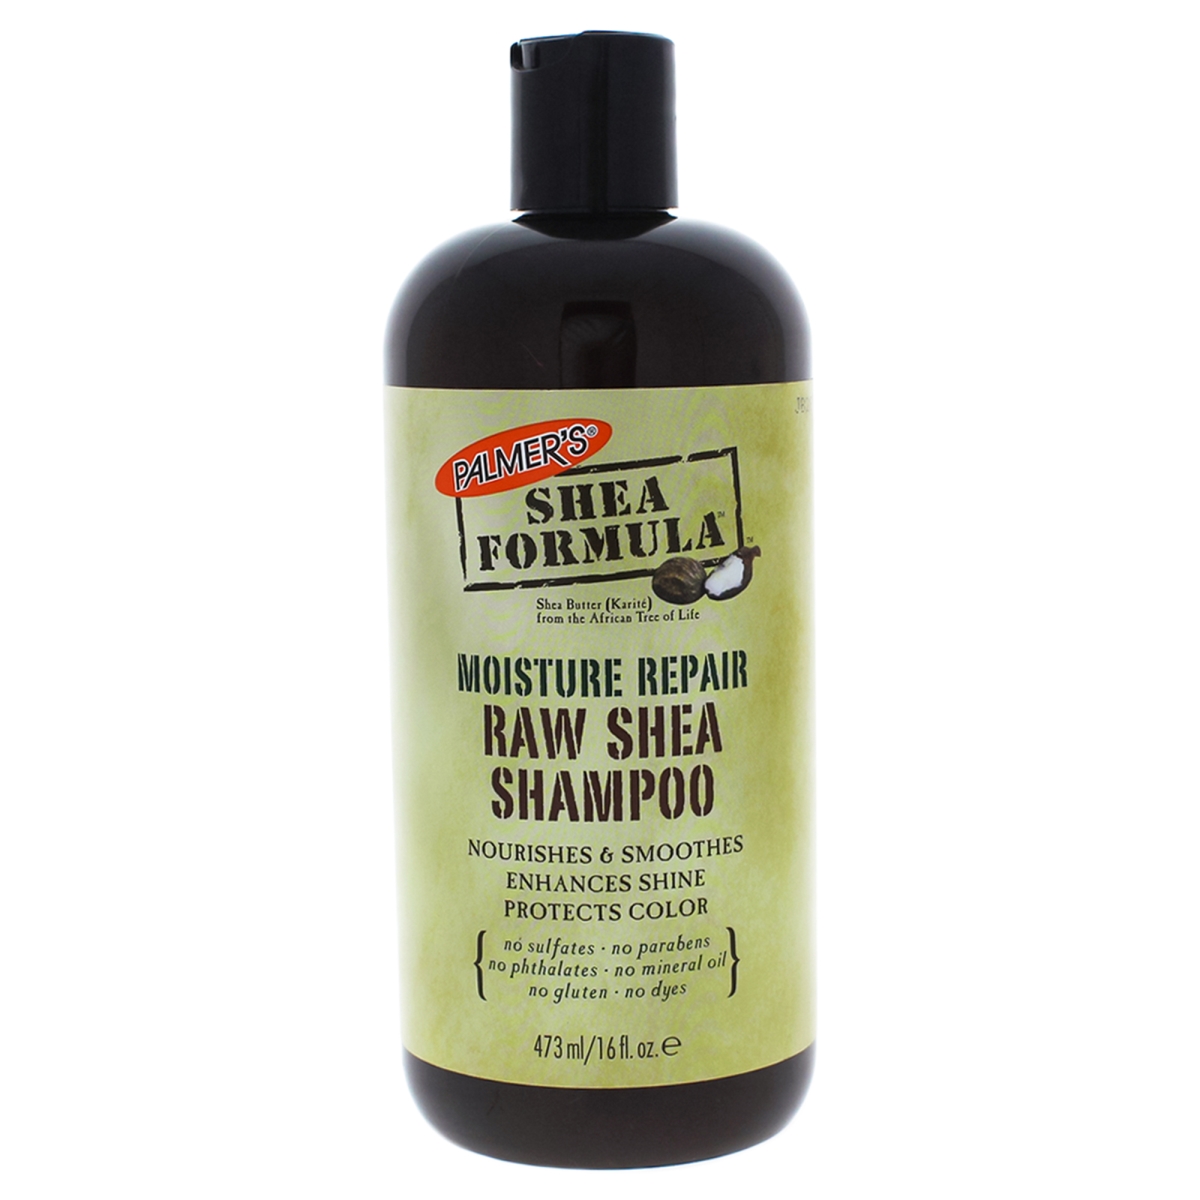 I0088466 Shea Formula Moisture Repair Raw Shea Shampoo For Unisex - 16 Oz